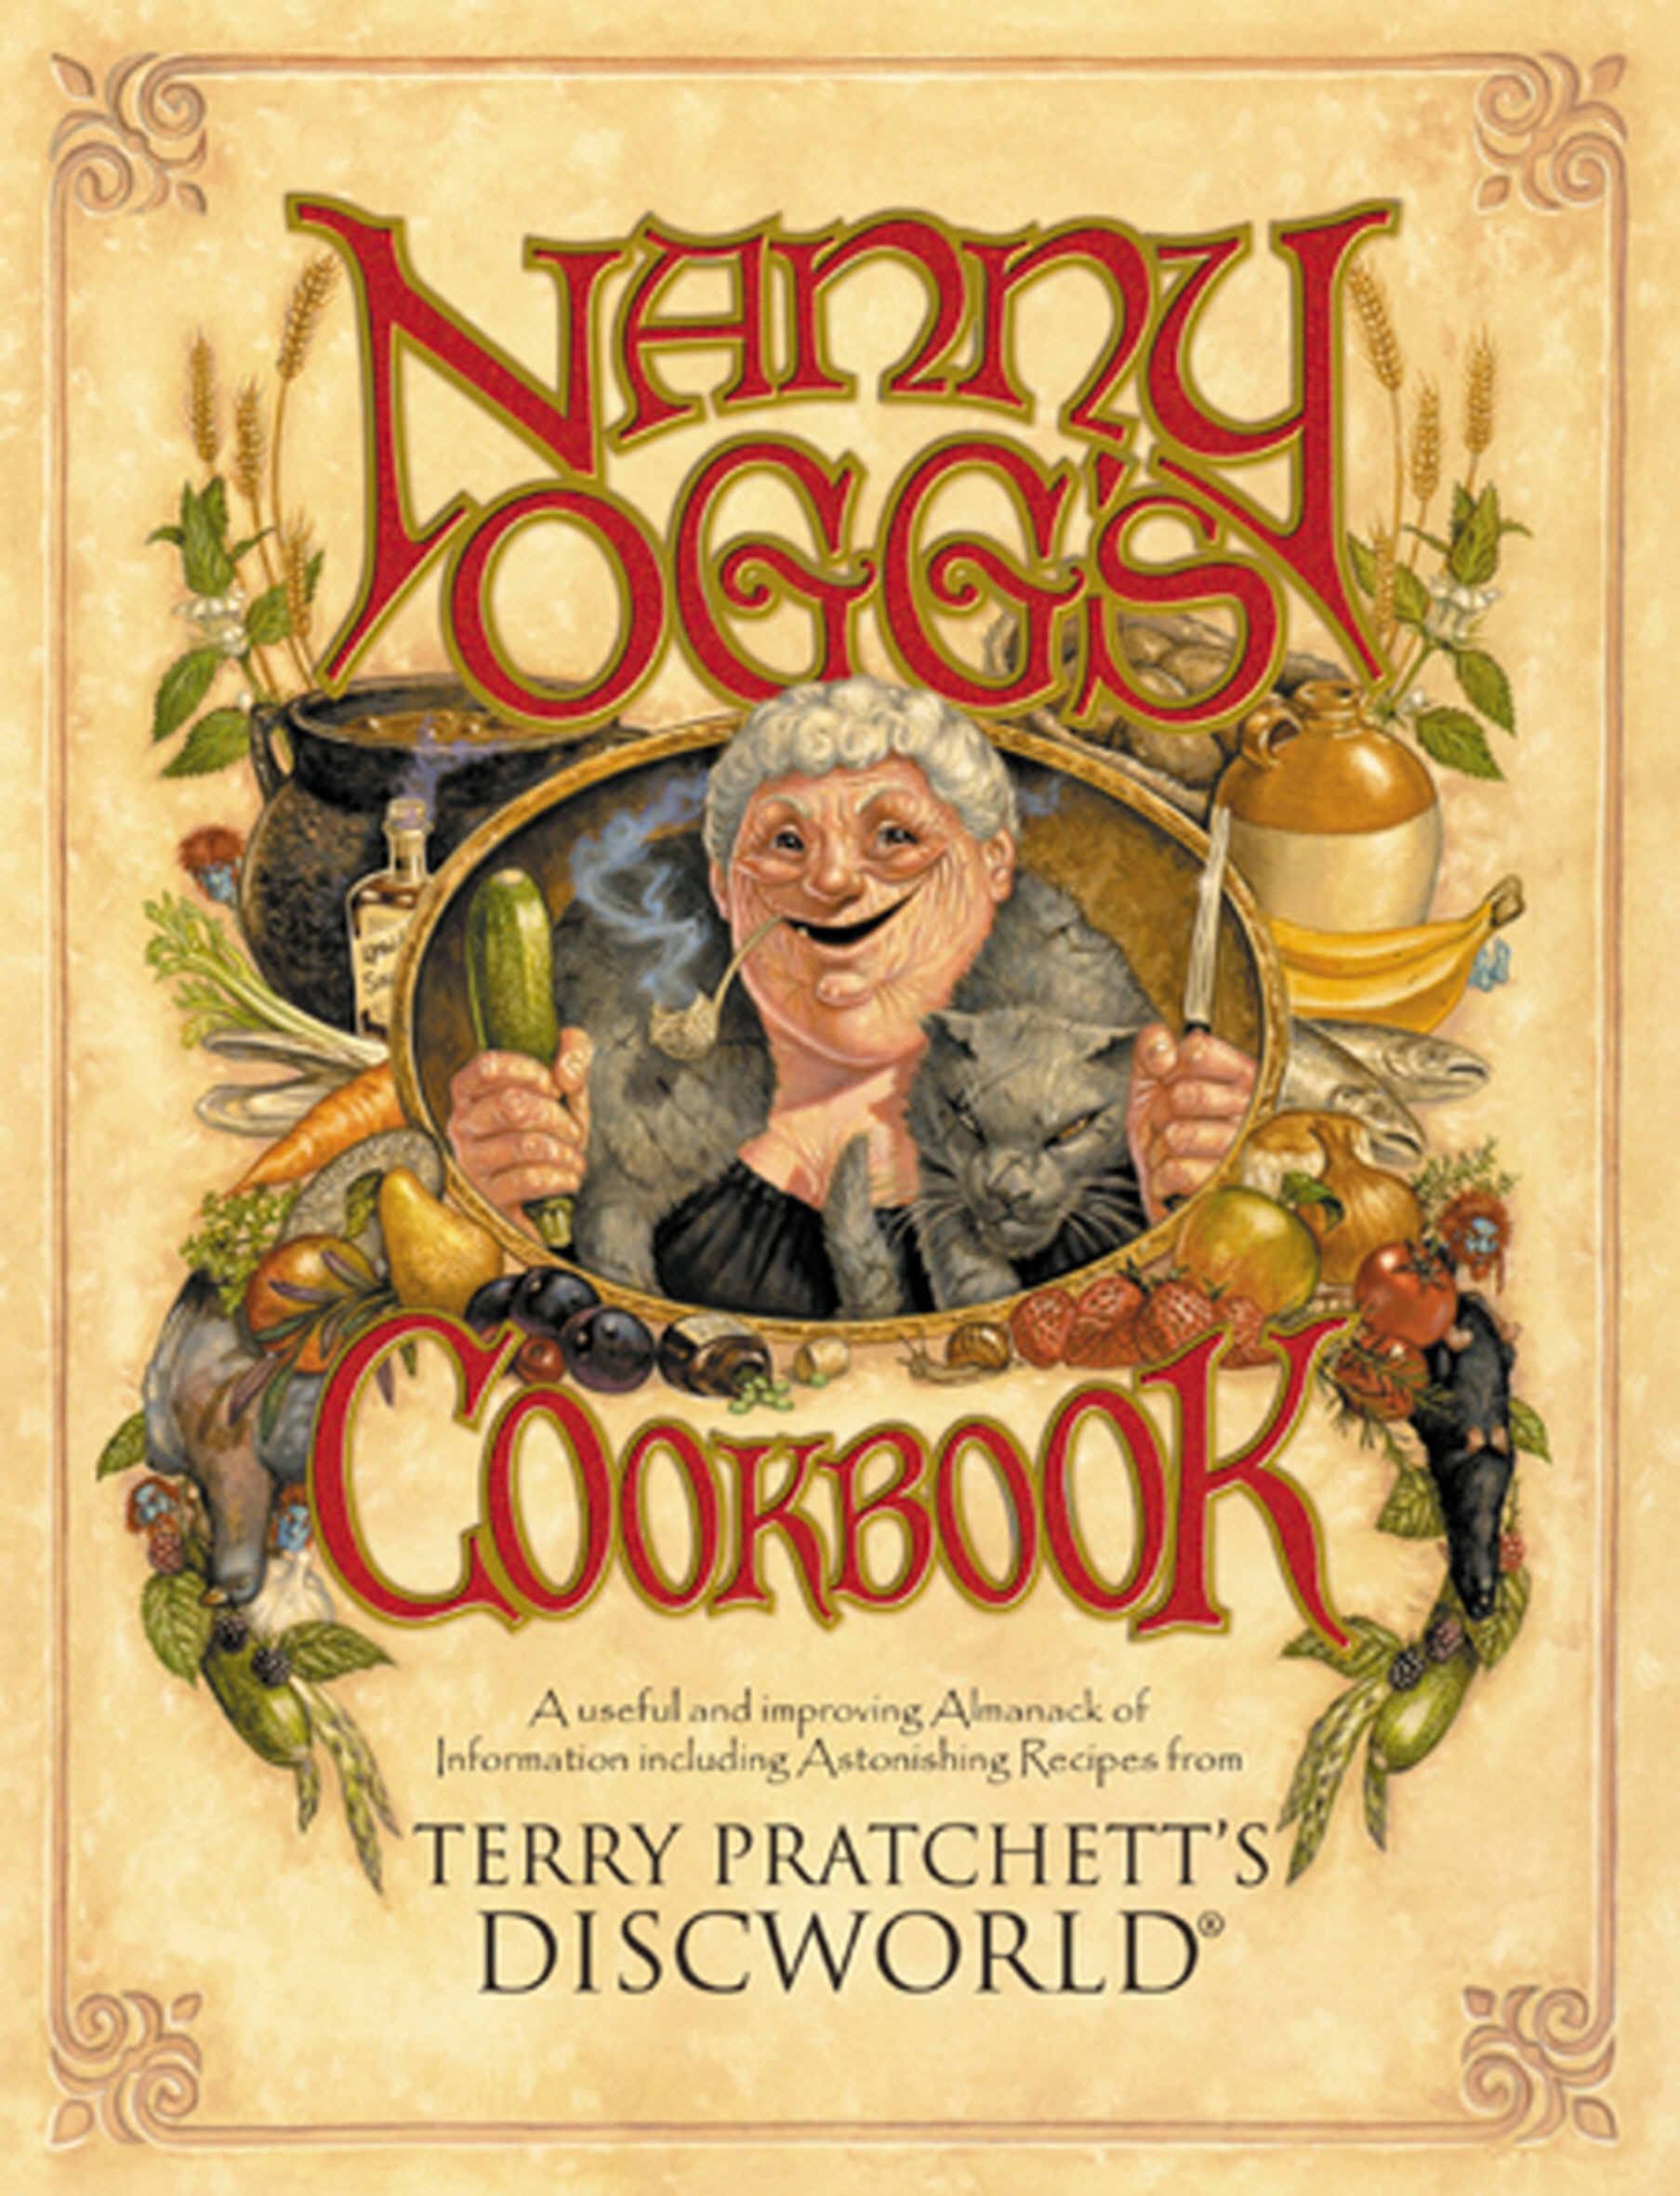 Book “Nanny Ogg's Cookbook” by Terry Pratchett — November 1, 2001